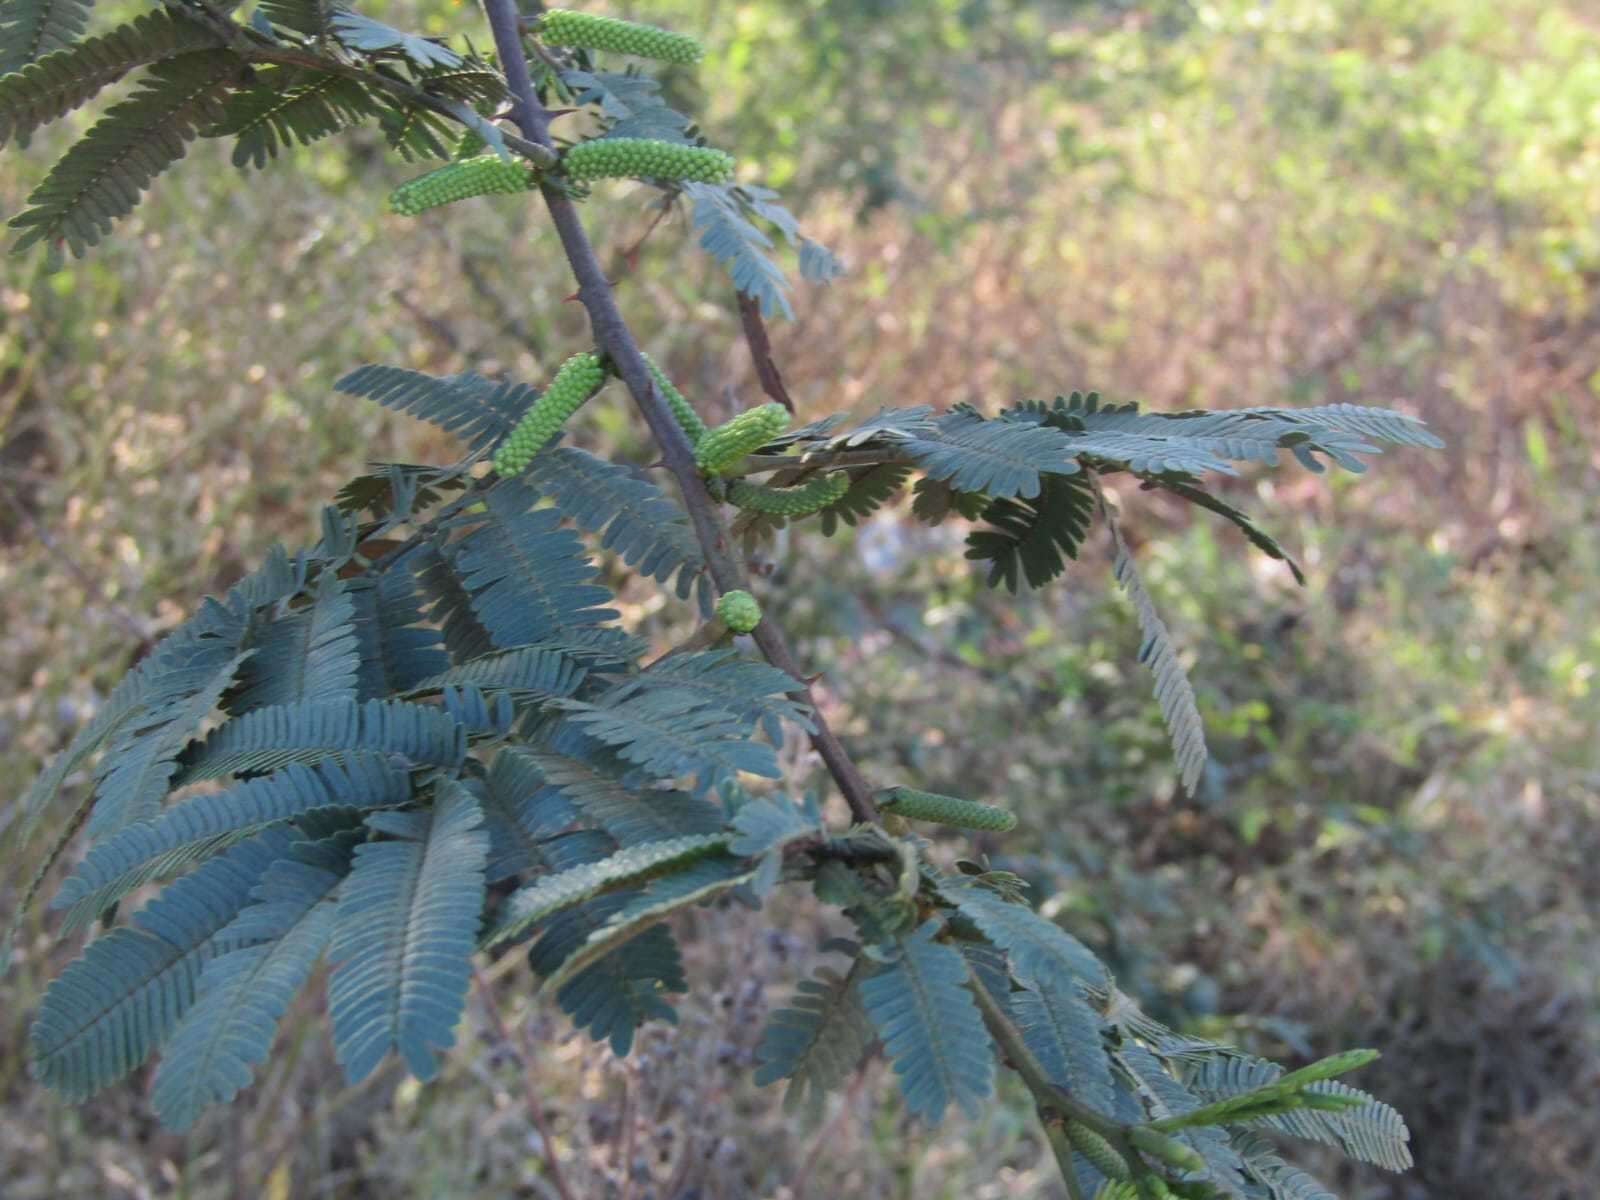 Image of Mimosa tenuiflora (Willd.) Poir.